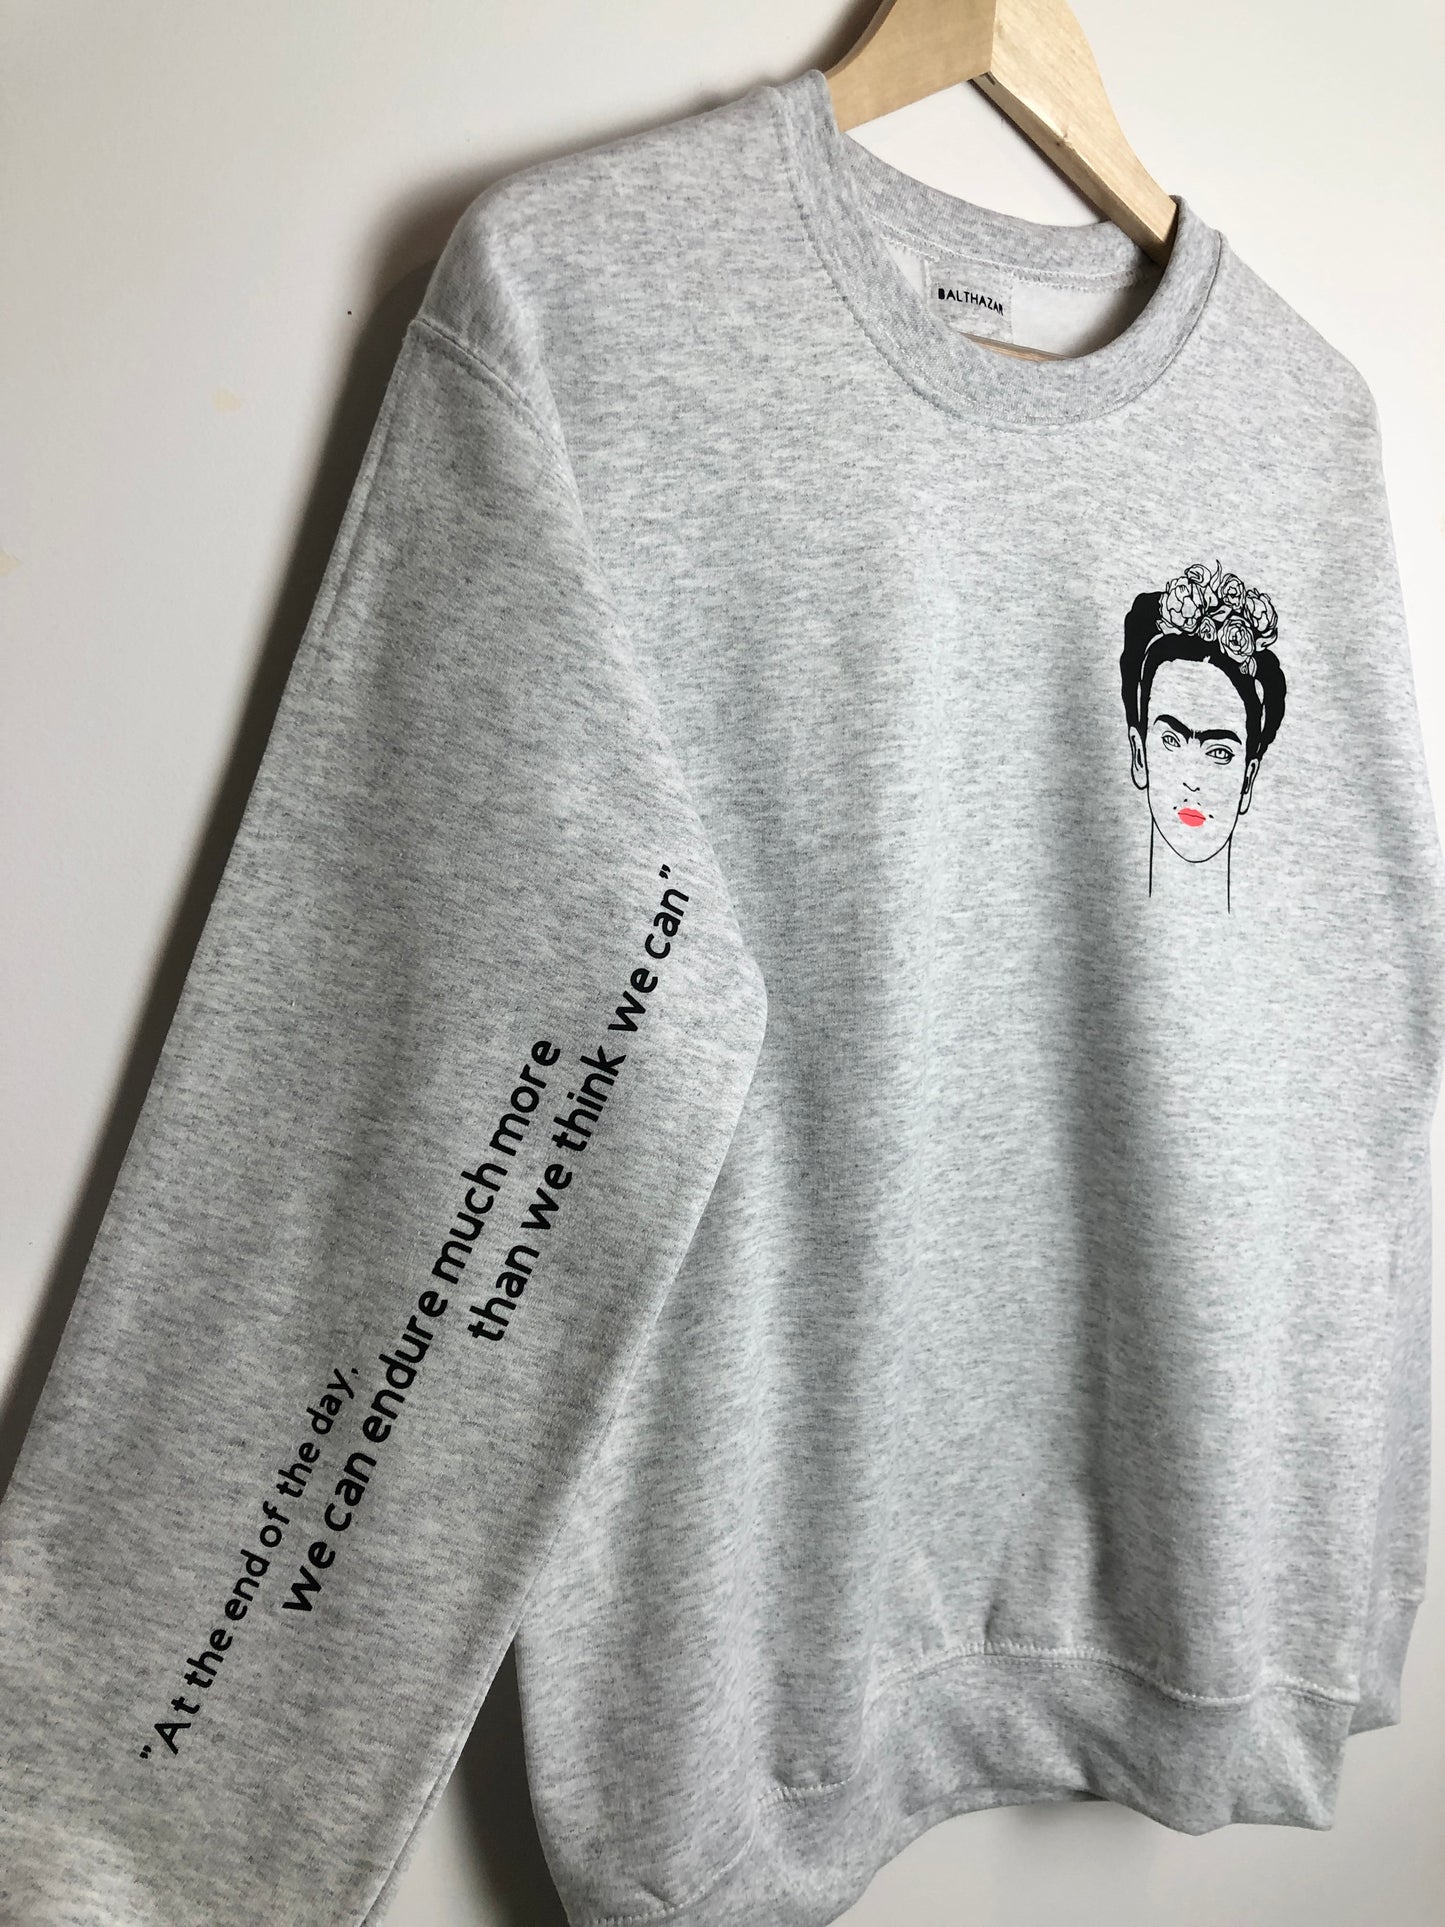 Frida sweatshirt - Inspirational artist quote